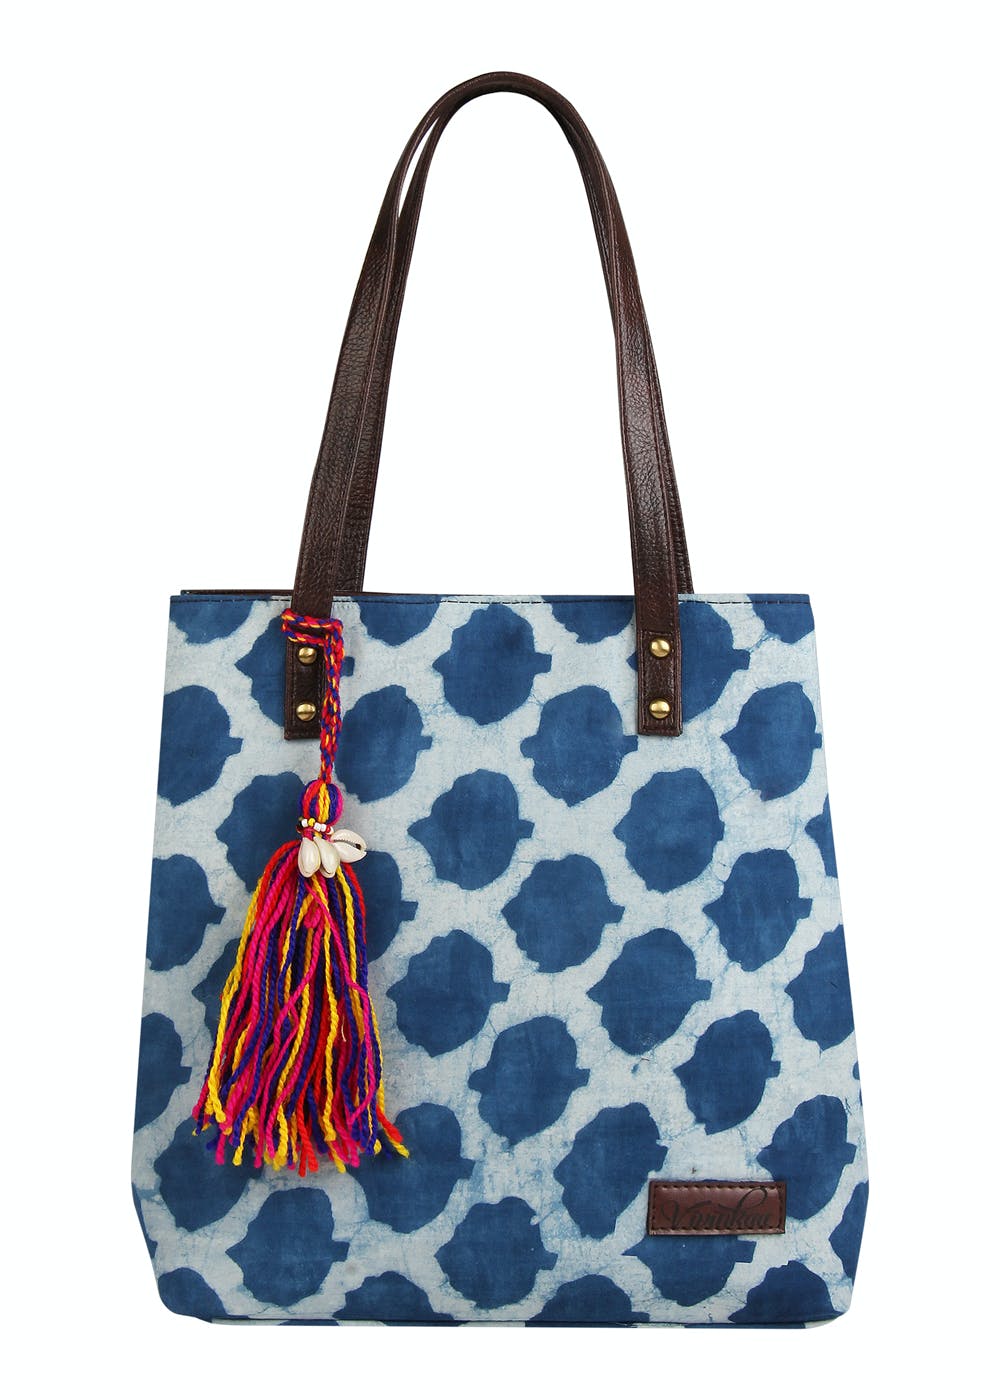 Get Monochromatic Design Handbag at ₹ 1799 | LBB Shop